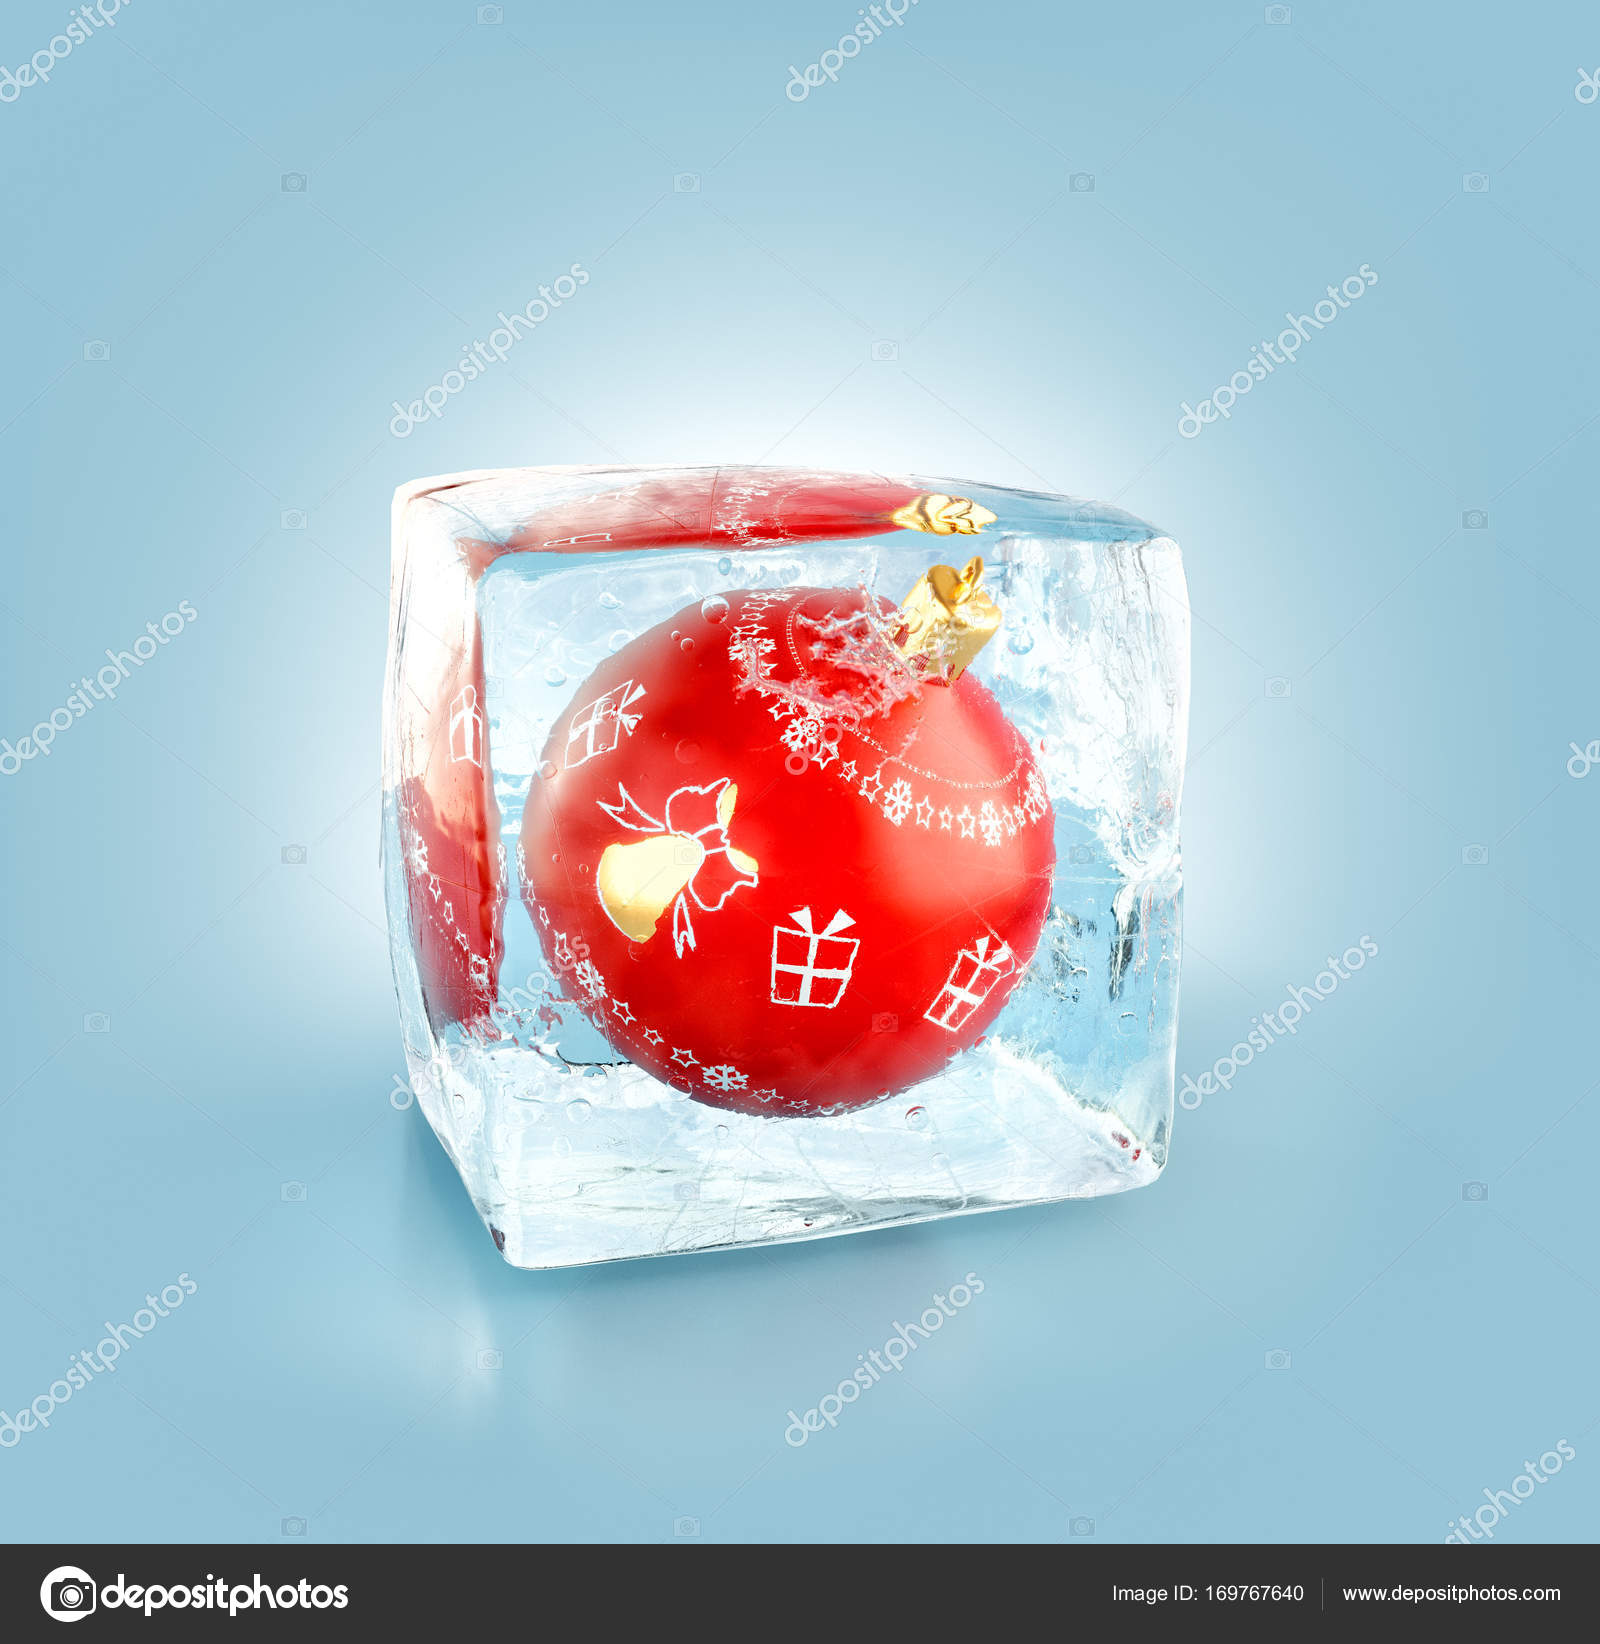 https://st3.depositphotos.com/1064045/16976/i/1600/depositphotos_169767640-stock-photo-beautiful-red-christmas-ball-inside.jpg